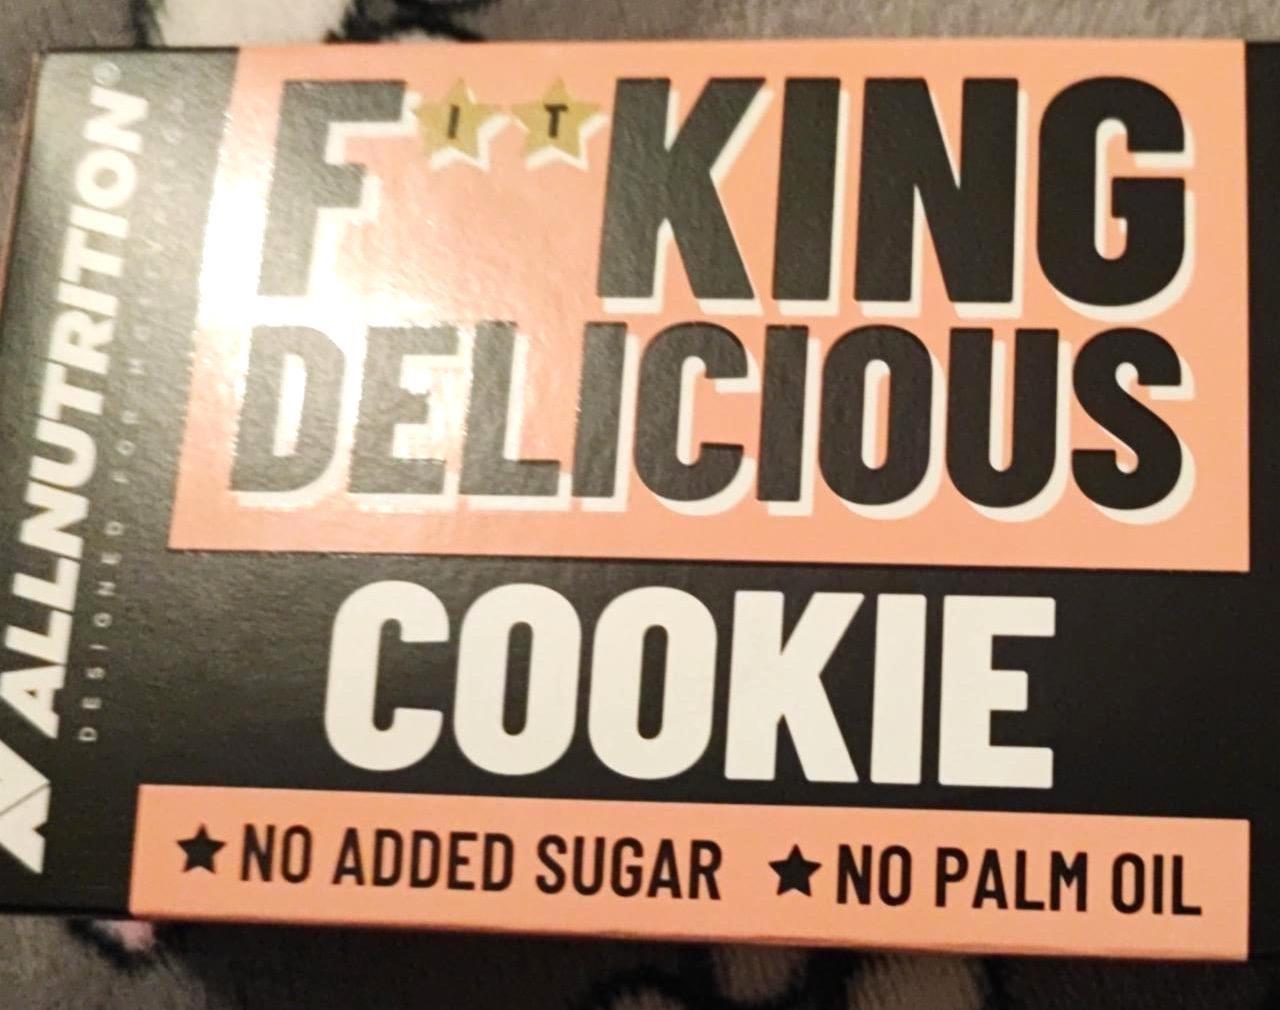 Képek - F**king delicious cookie chocolate chip Allnutrition